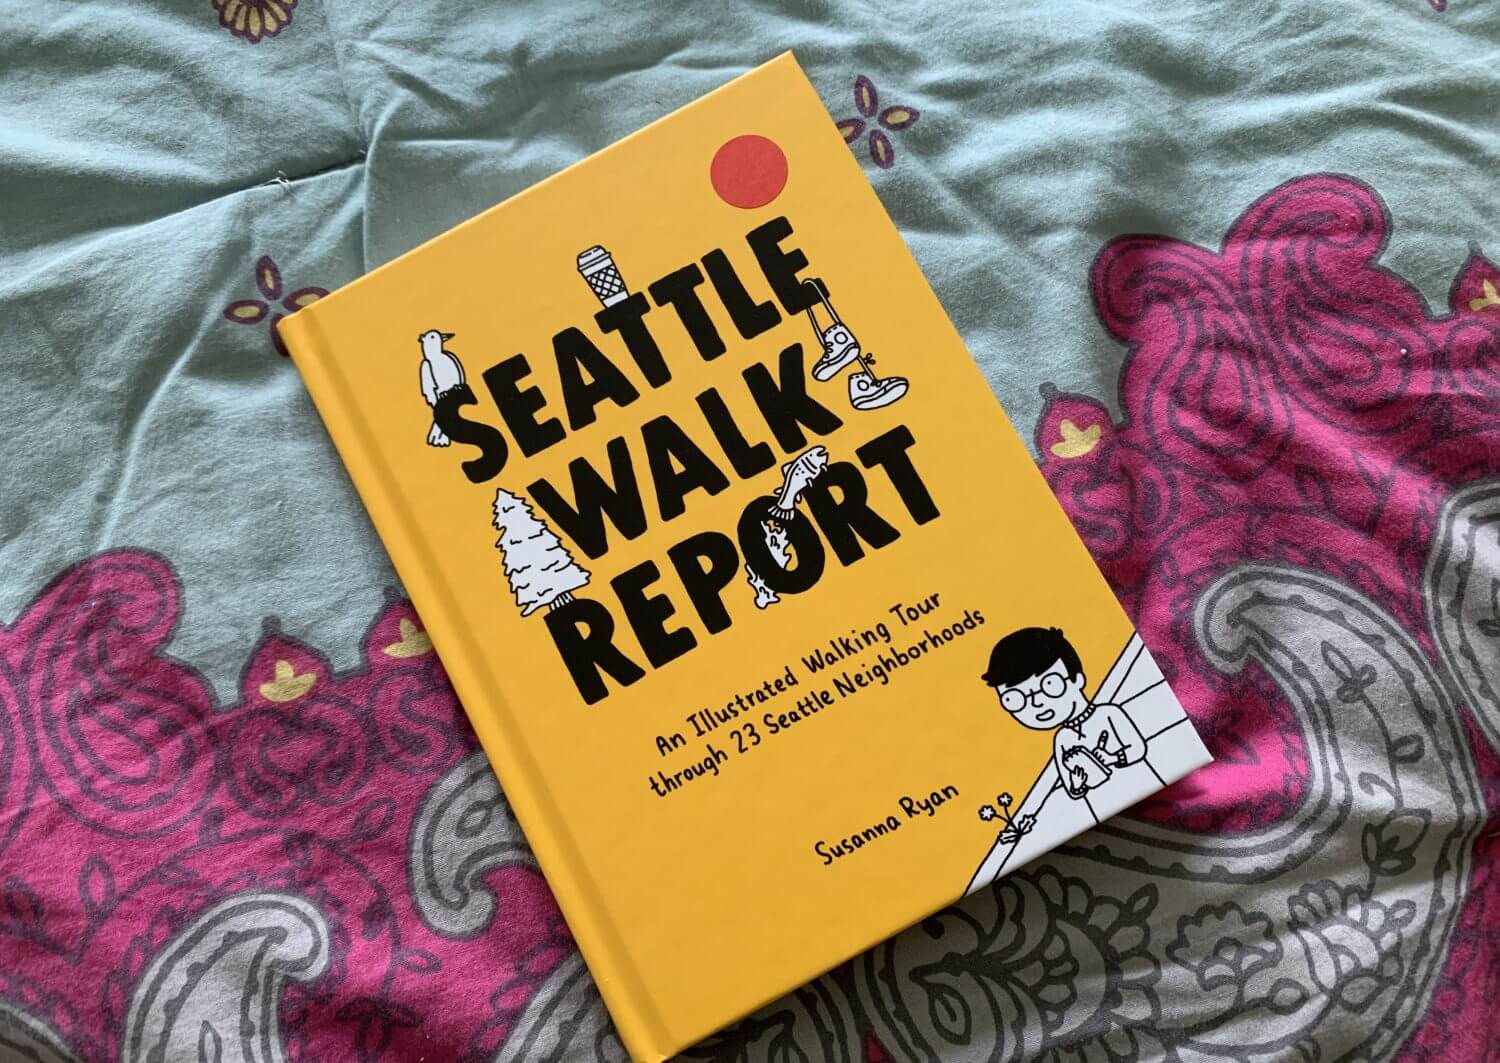 Seattle Walk Report Book